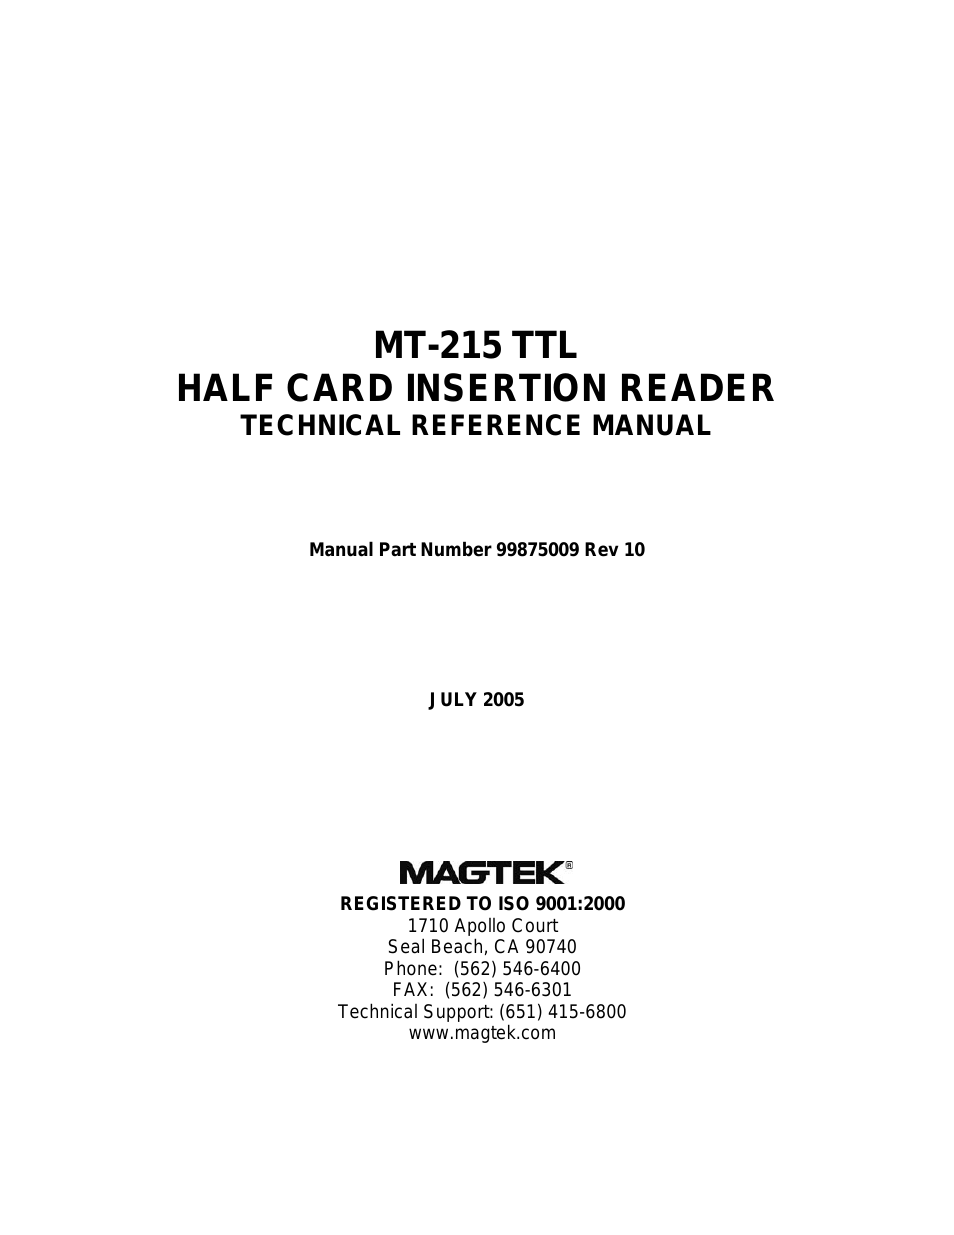 MT-215 TTL HALF CARD